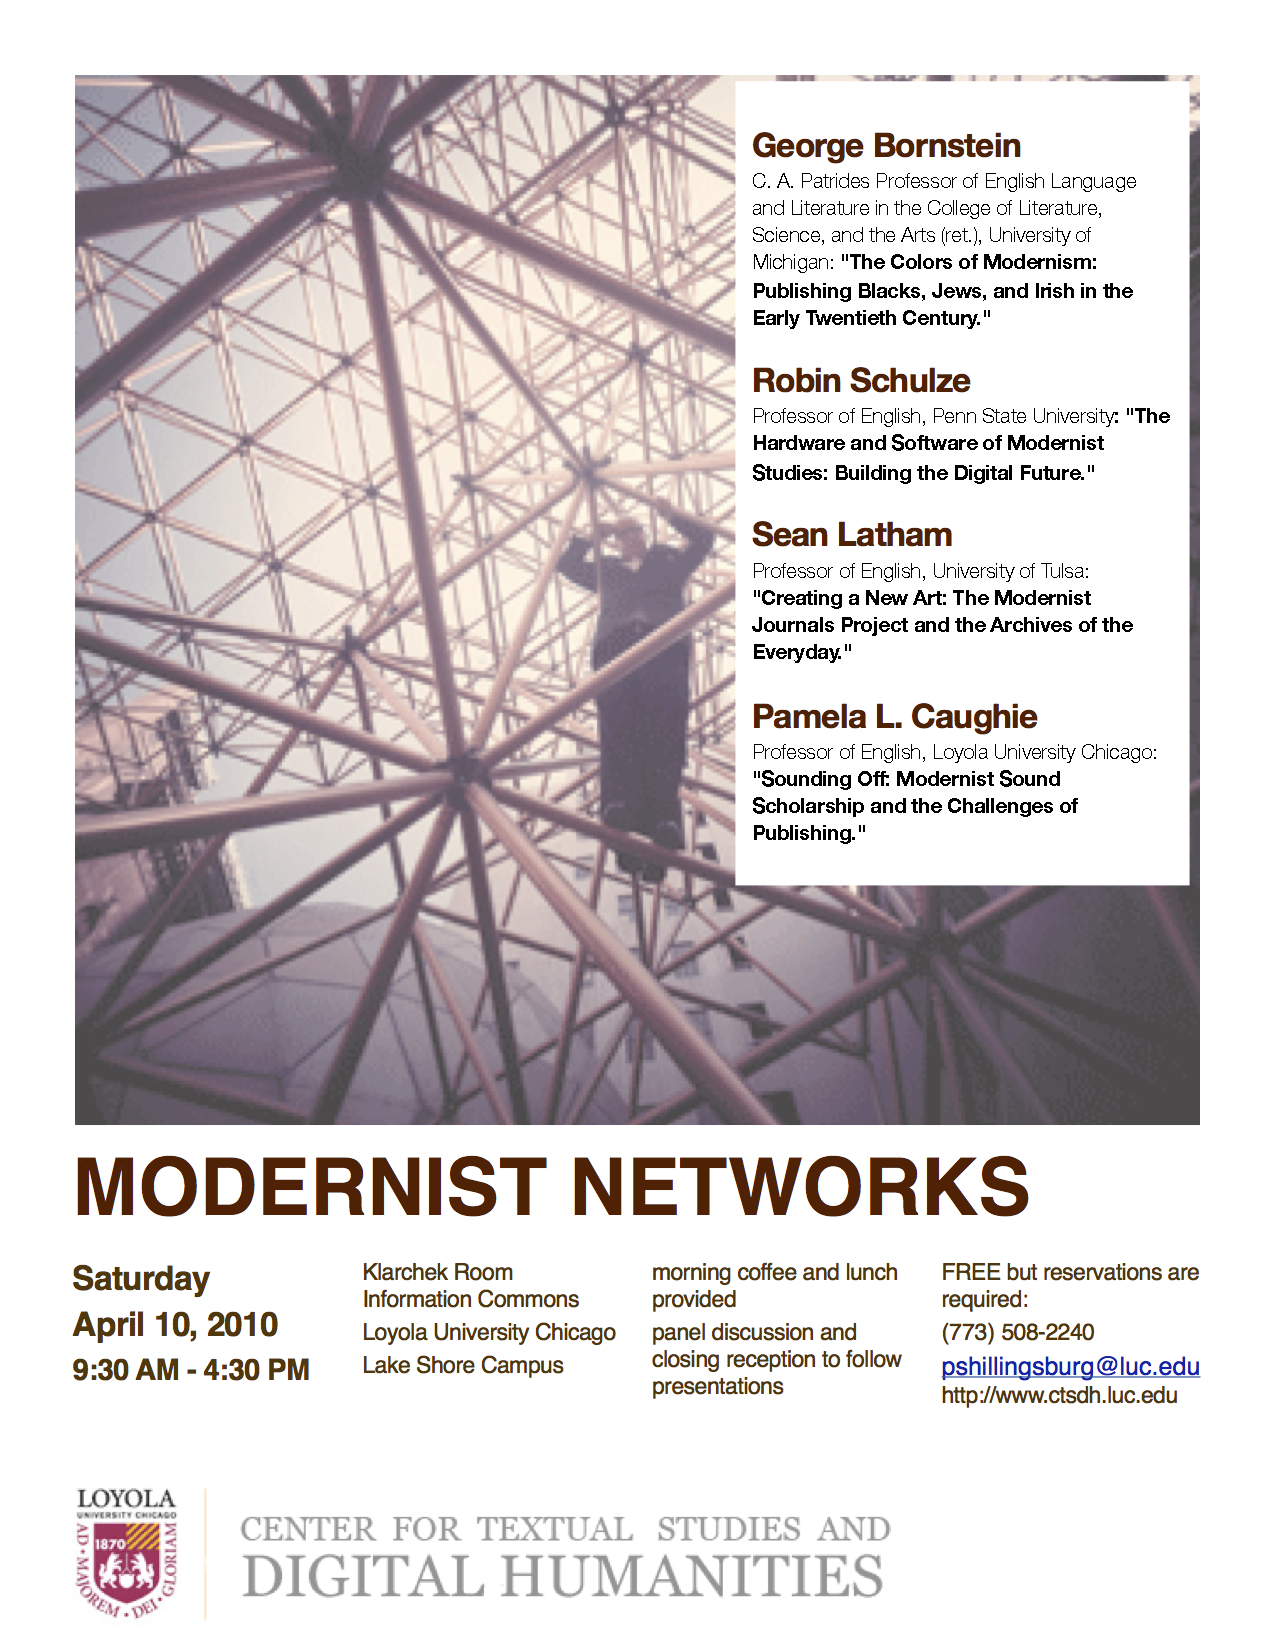 Modernist Networks - George Bornstein (UMichigan), Robin Schulze (Penn State), Sean Latham (U Tulsa), Pamela L. Caughie (Loyola Chicago), April 10, 2010